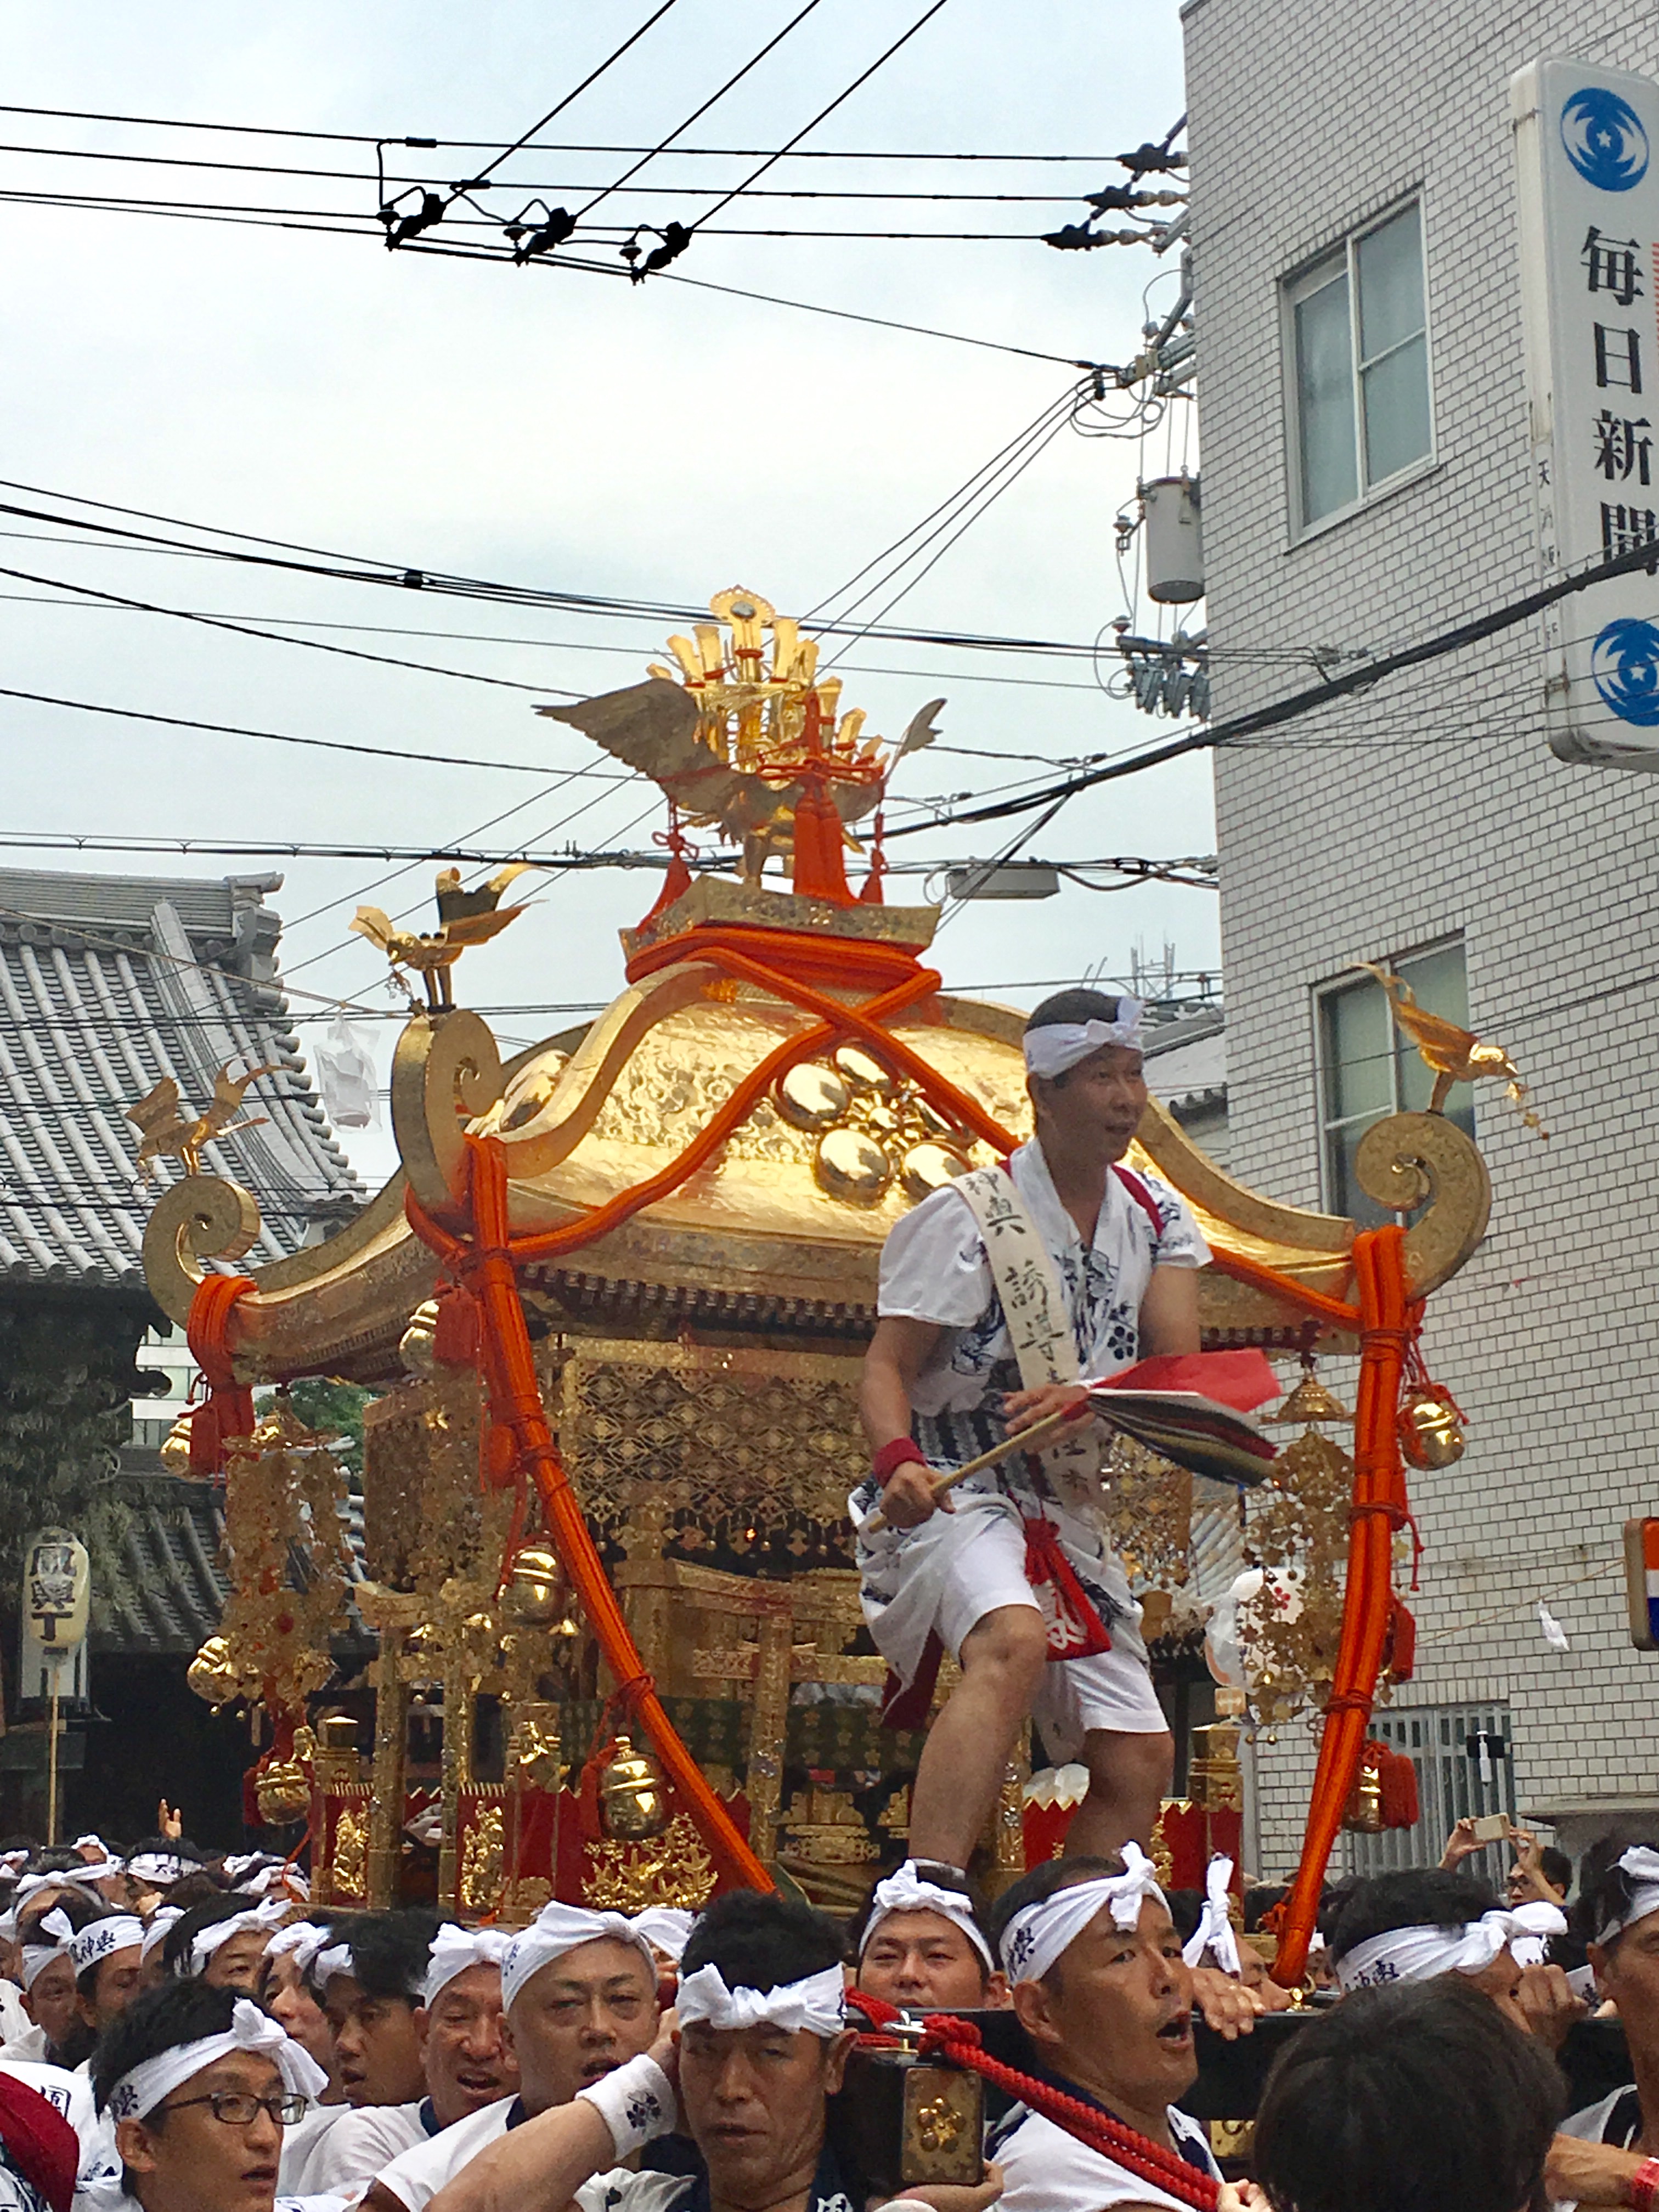 people riding large portable shrine through the street at tenjin matsuri